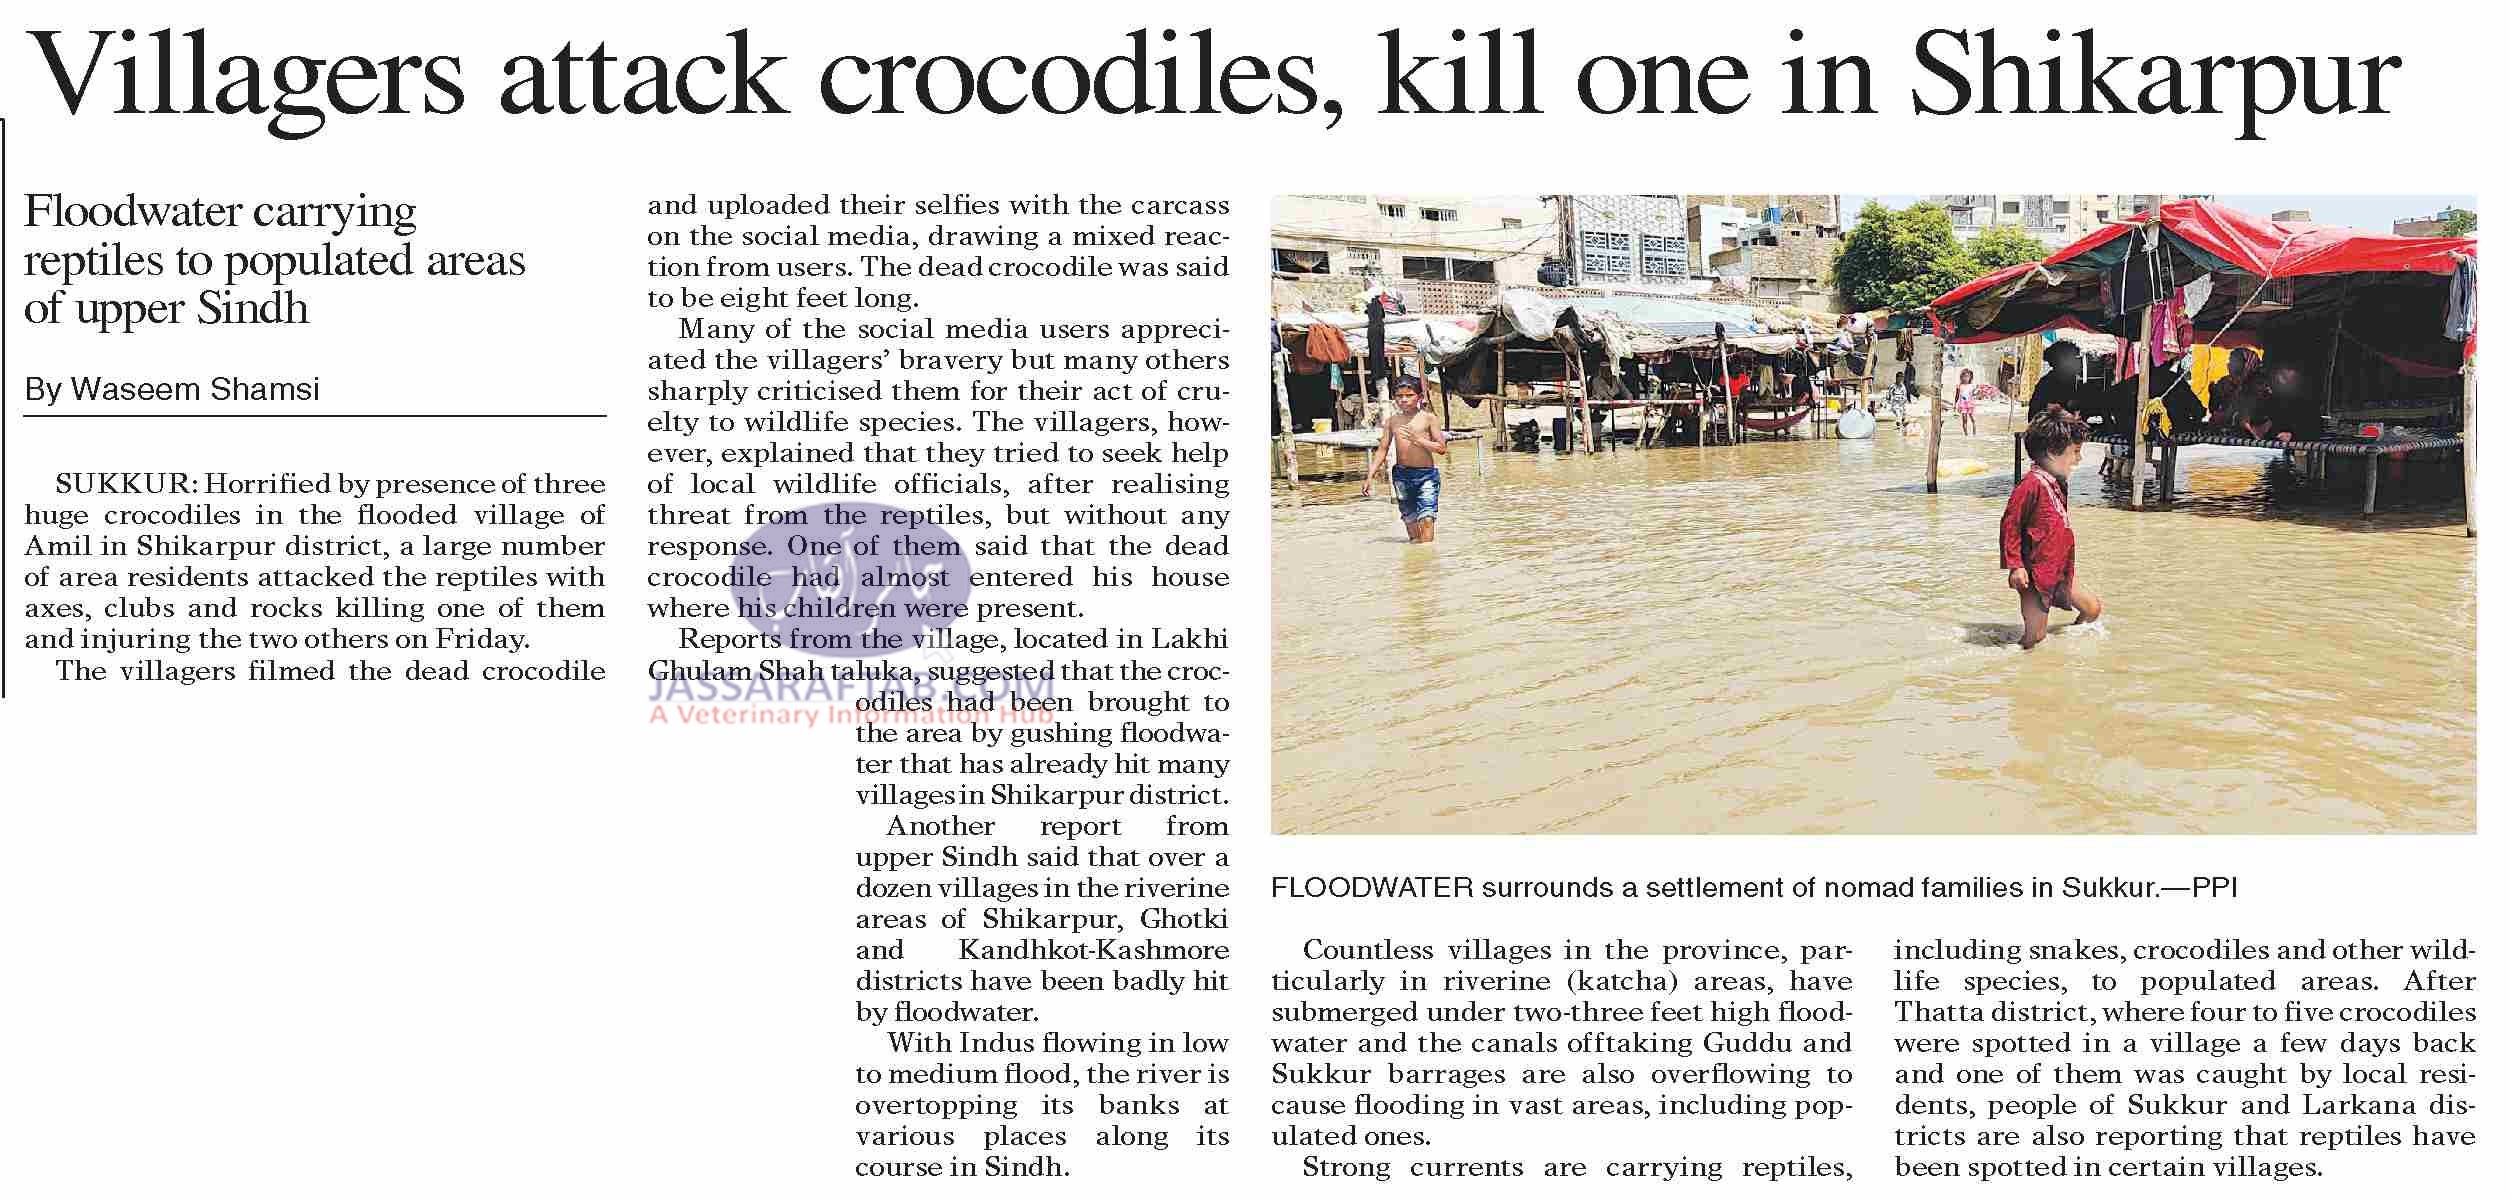 Attack on Crocodiles in Shikarpur